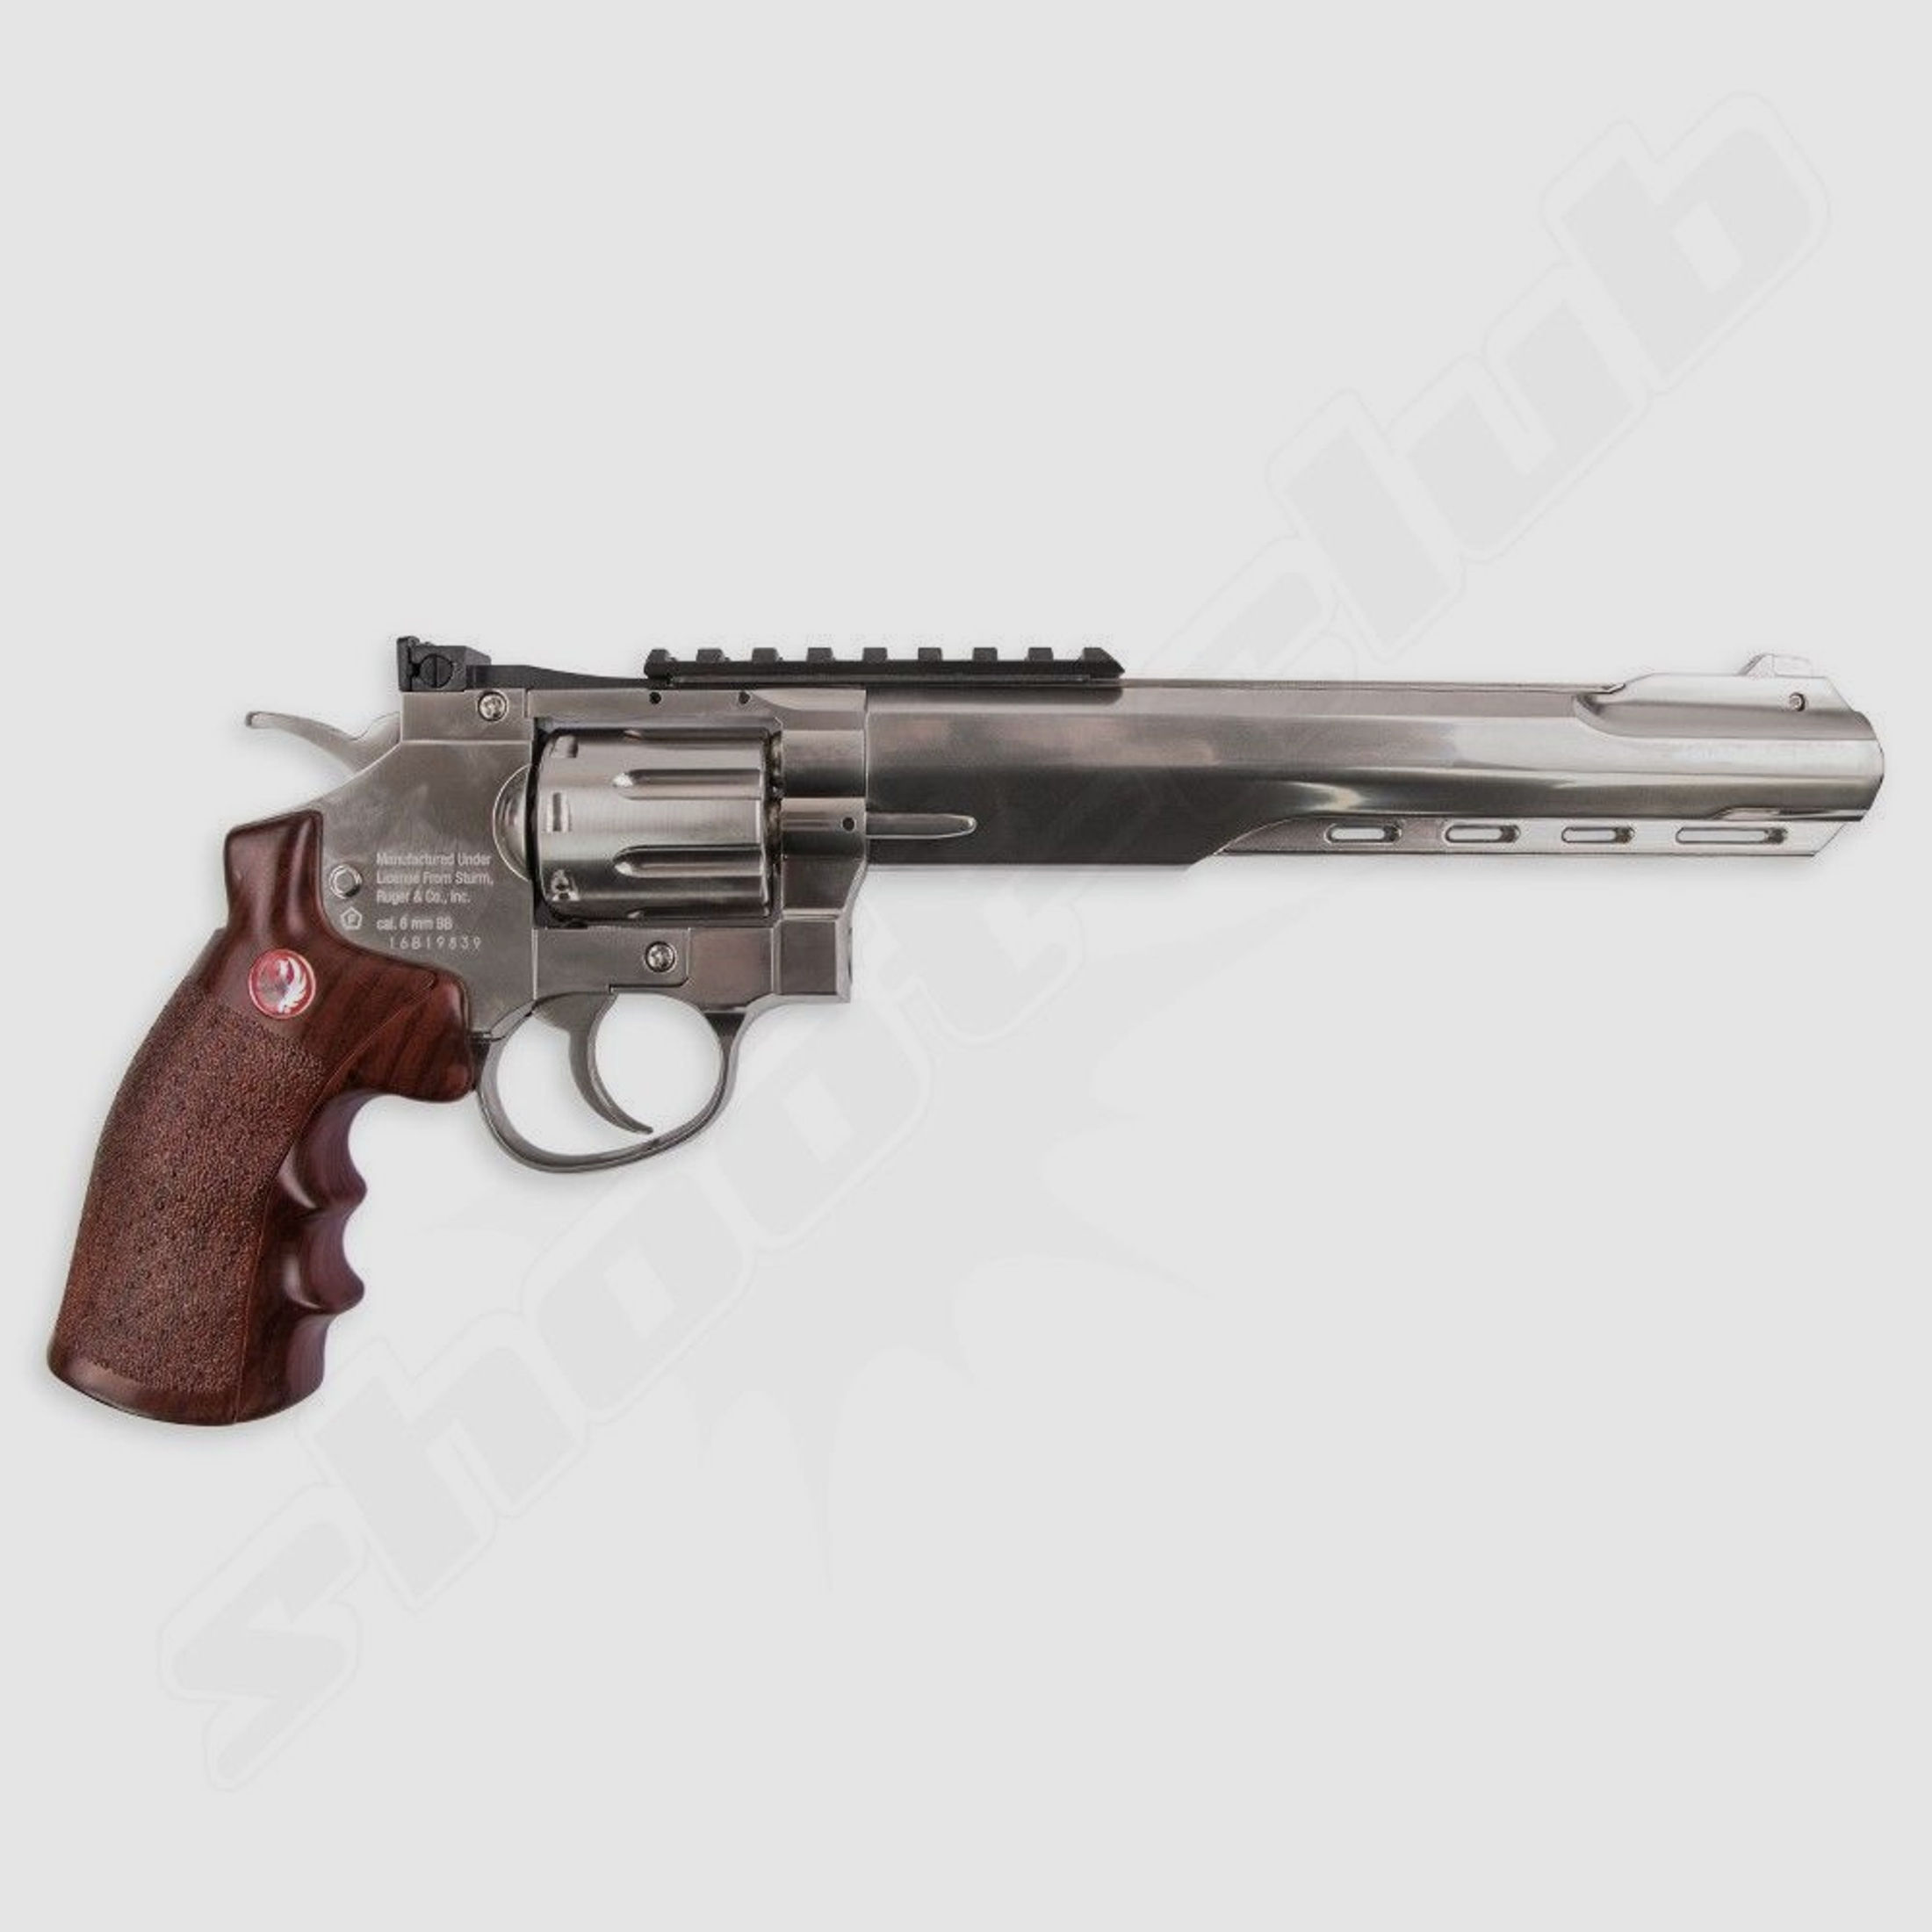 Ruger Super Hawk 8" CO2 Softair Revolver chrom - 6mm